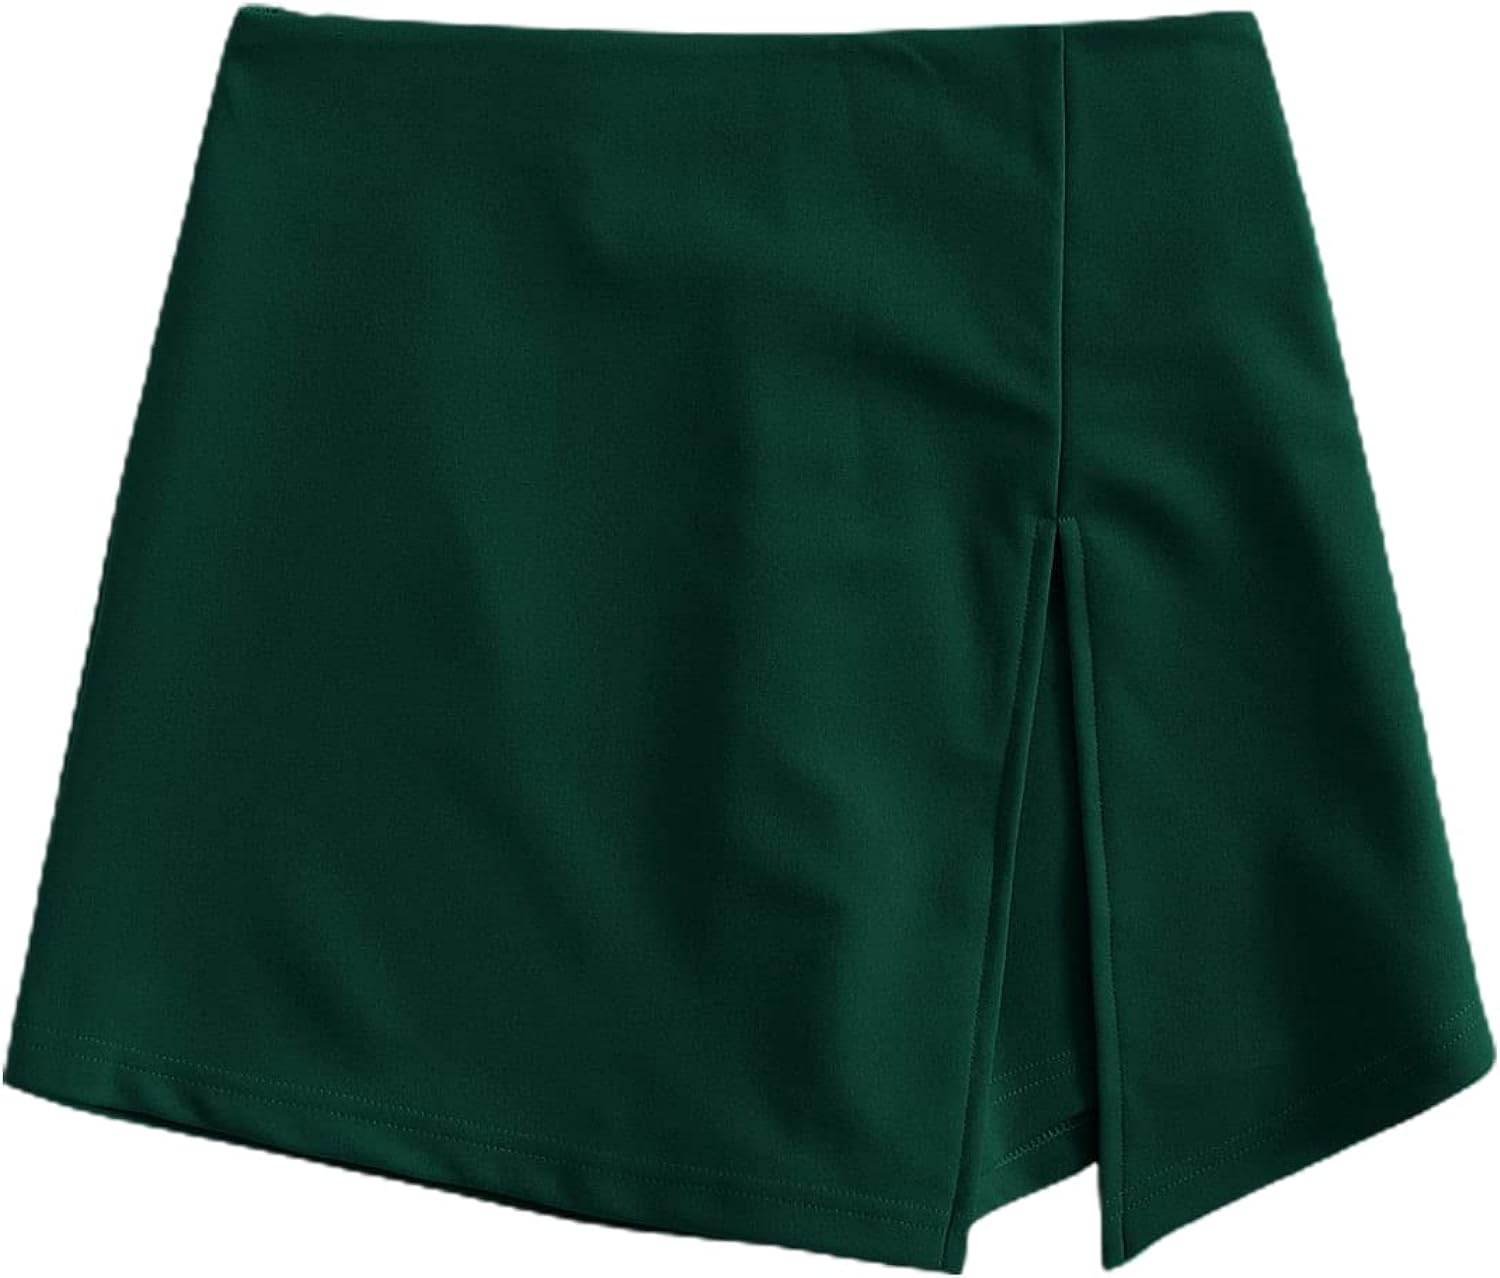 Floerns Women's Plus Size Asymmetrical Skorts High Waisted Skirts Shorts 